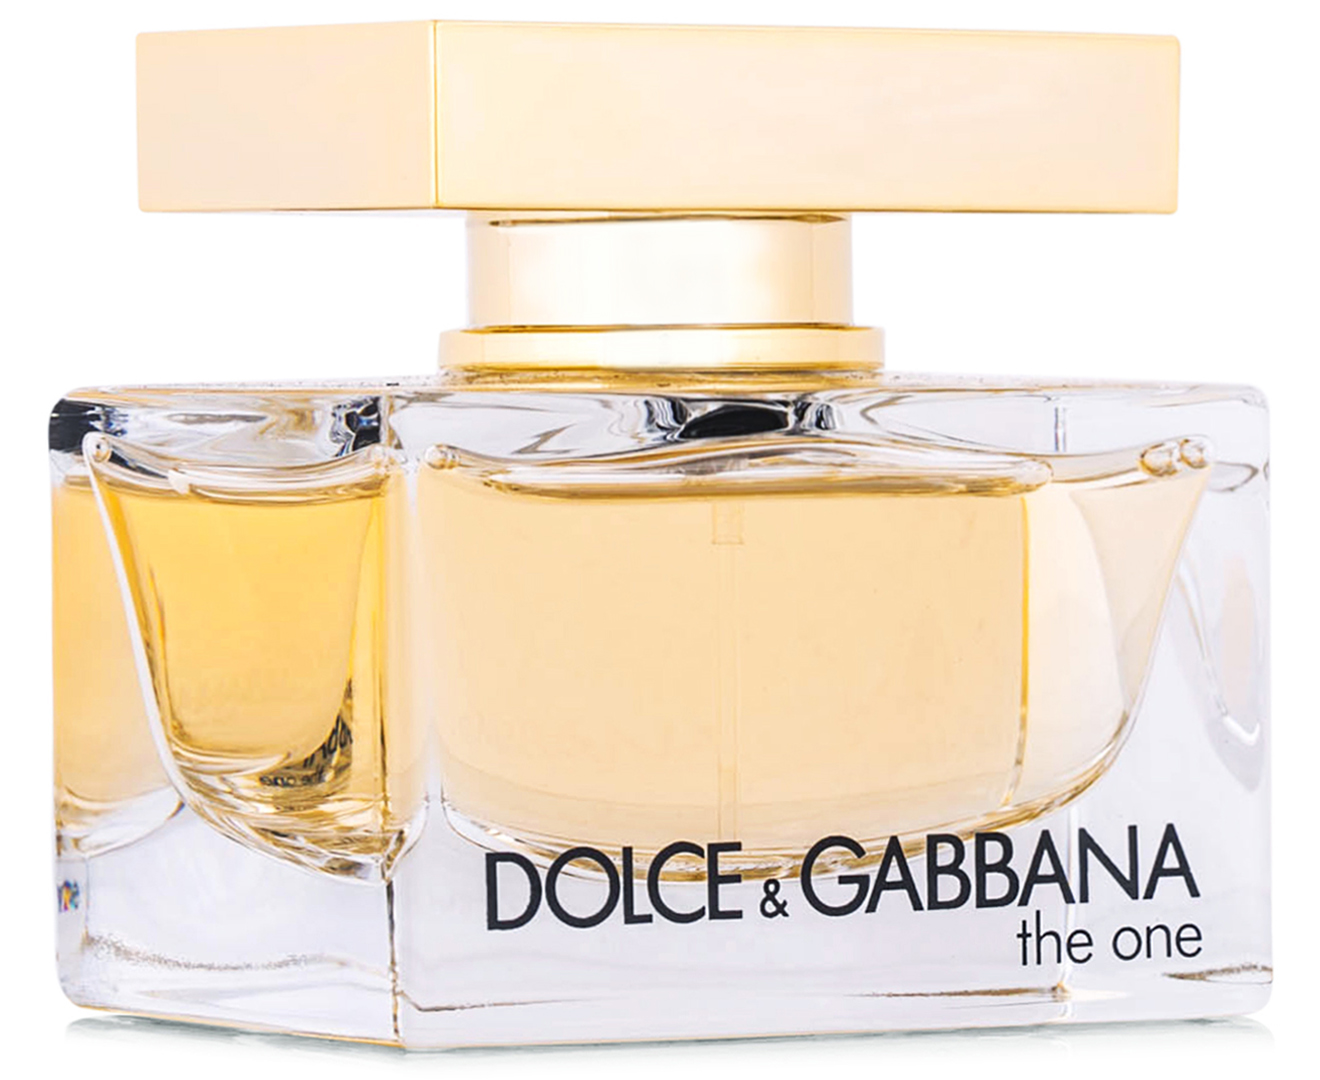 Дольче габбана ван цена. Dolce & Gabbana the one women EDP, 75 ml. Dolce & Gabbana the one for women EDP 50 ml. Dolce Gabbana the one женские 75 мл. Dolce Gabbana the one женские 50 ml.